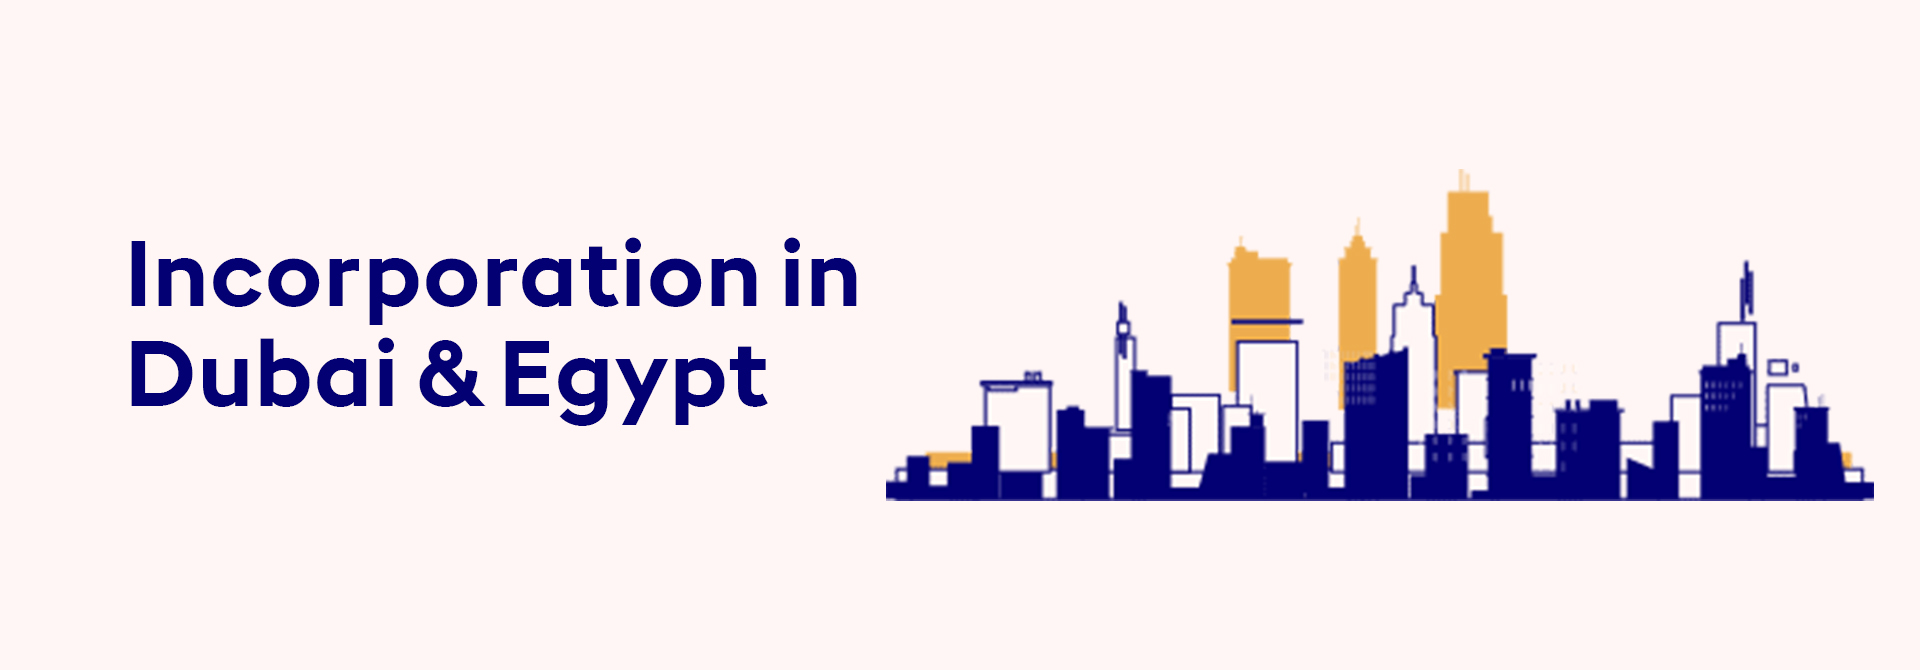 Incorporation in Dubai & Egypt